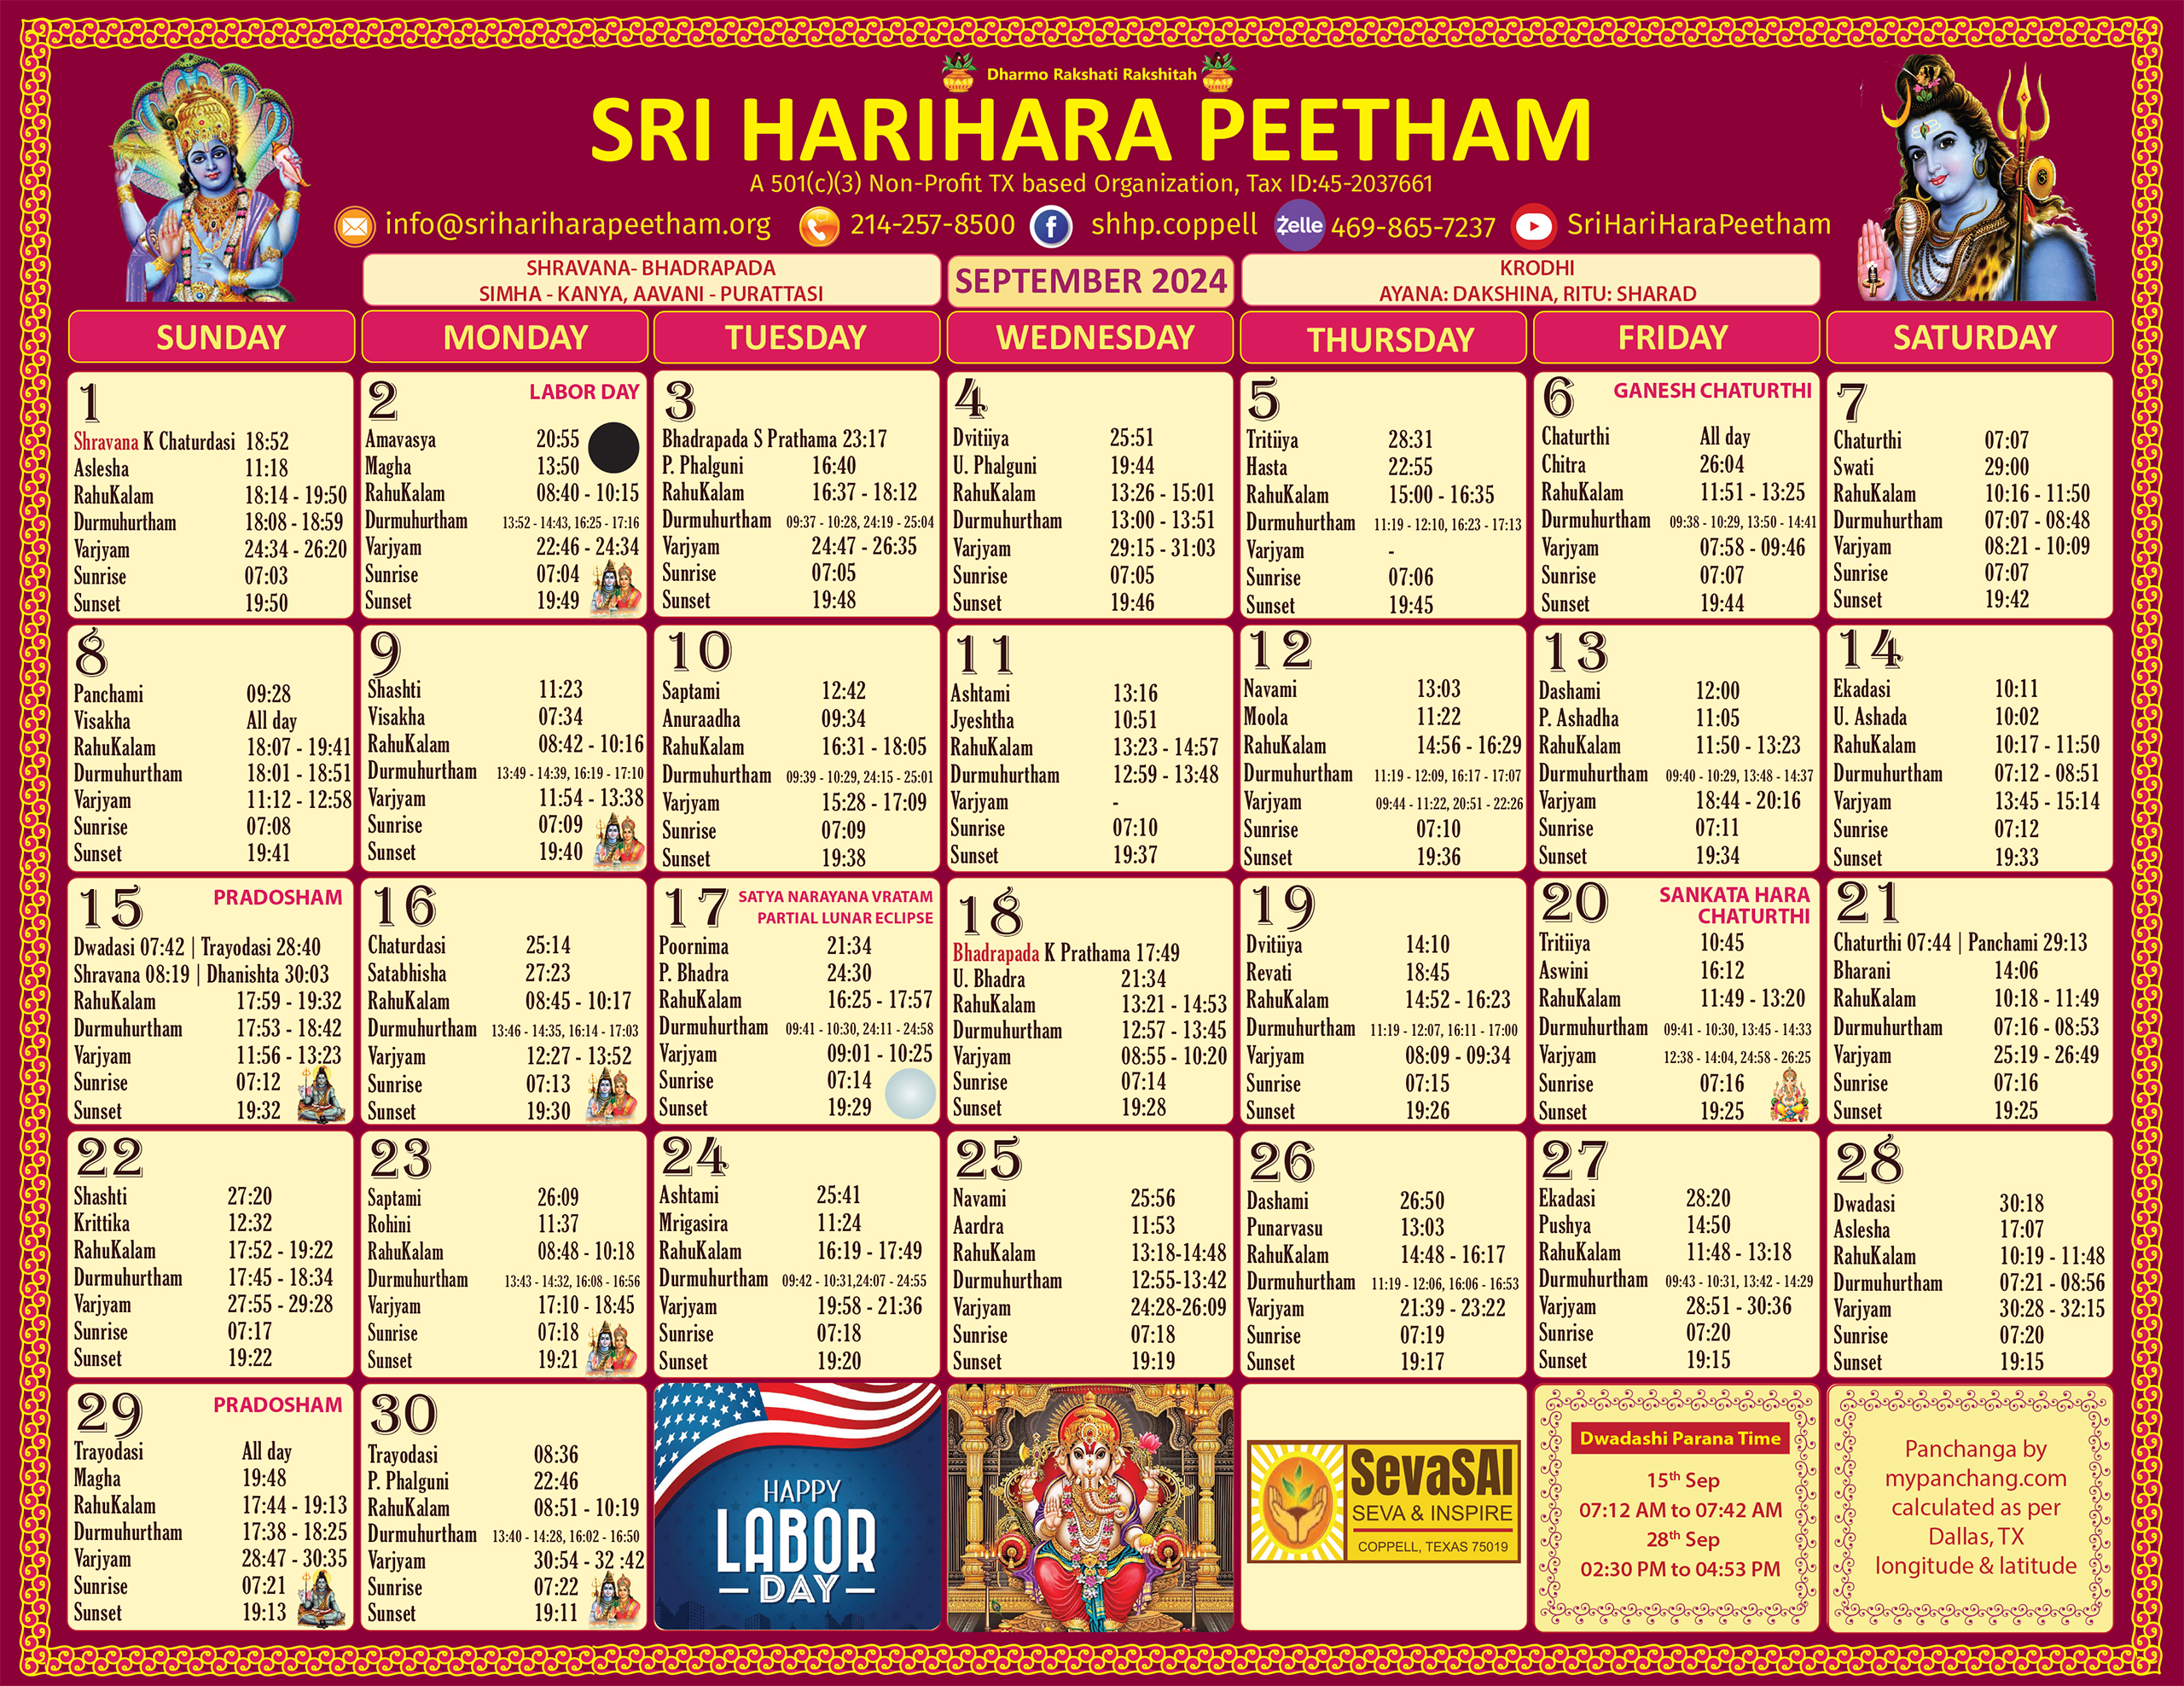 Sri HariHara Peetham's September 2024 calendar page